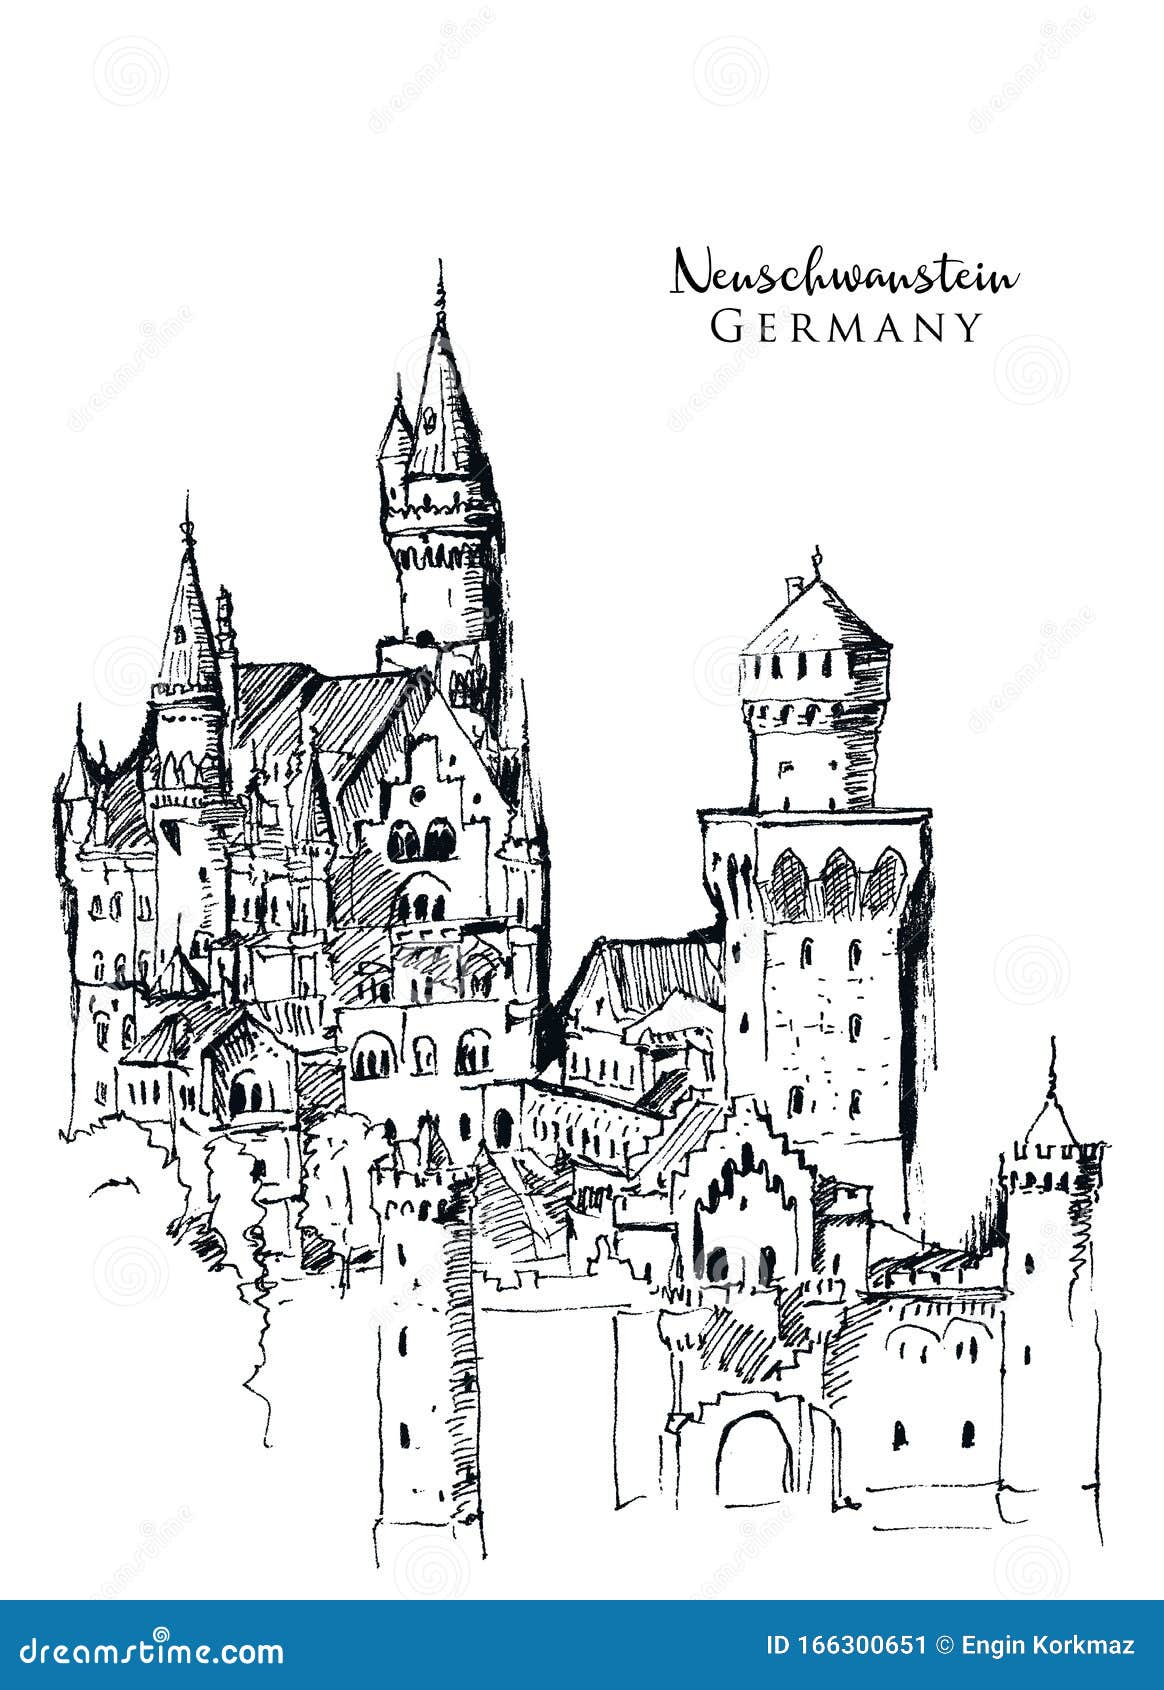 Munich Germany Neuschwanstein Castle Sketch Stylewatercolor Stock Vector  (Royalty Free) 713114134 | Shutterstock